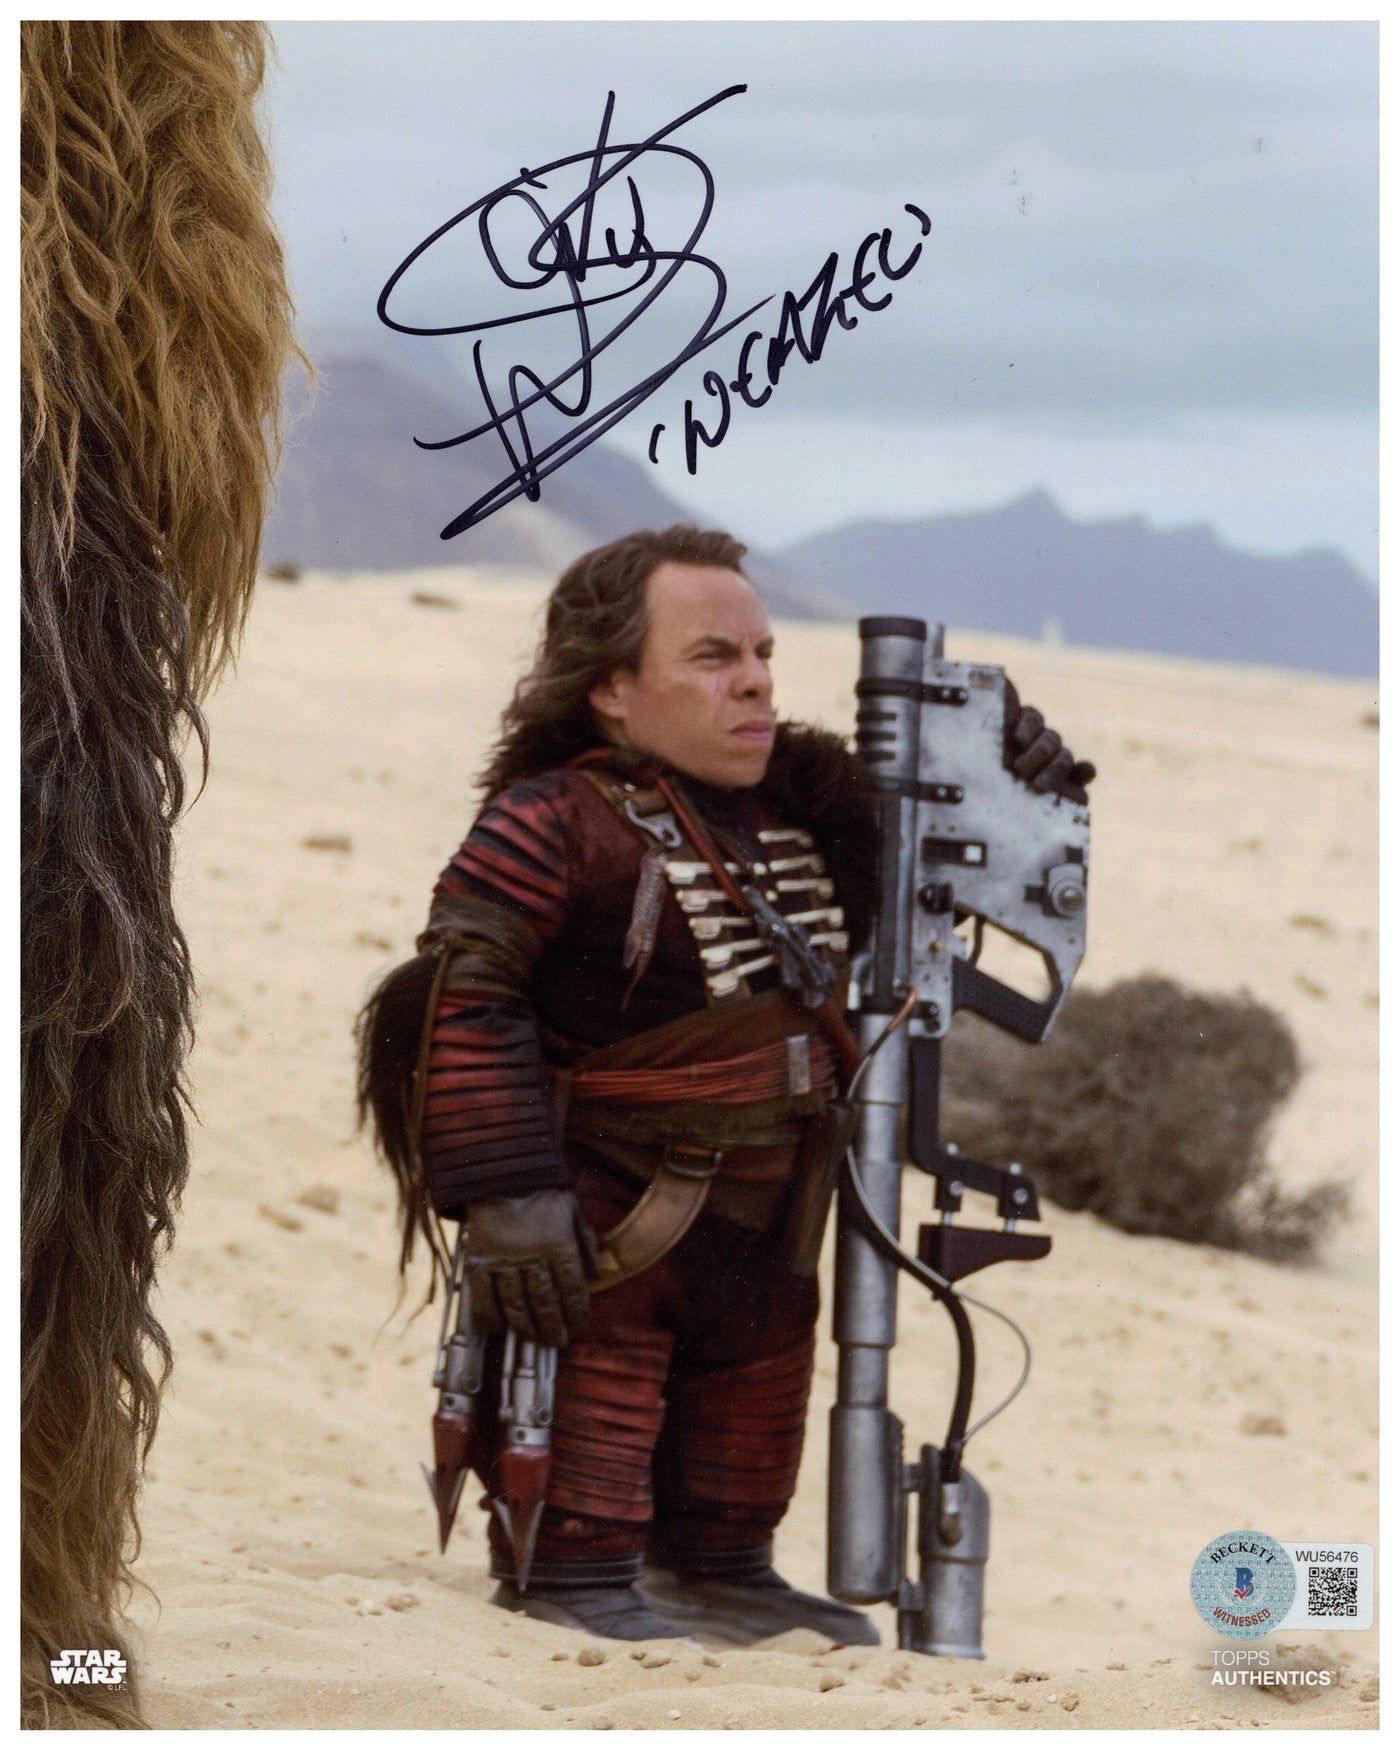 Warwick Davis Signed 8x10 Photo Star Wars Autographed TOPPS Beckett COA.